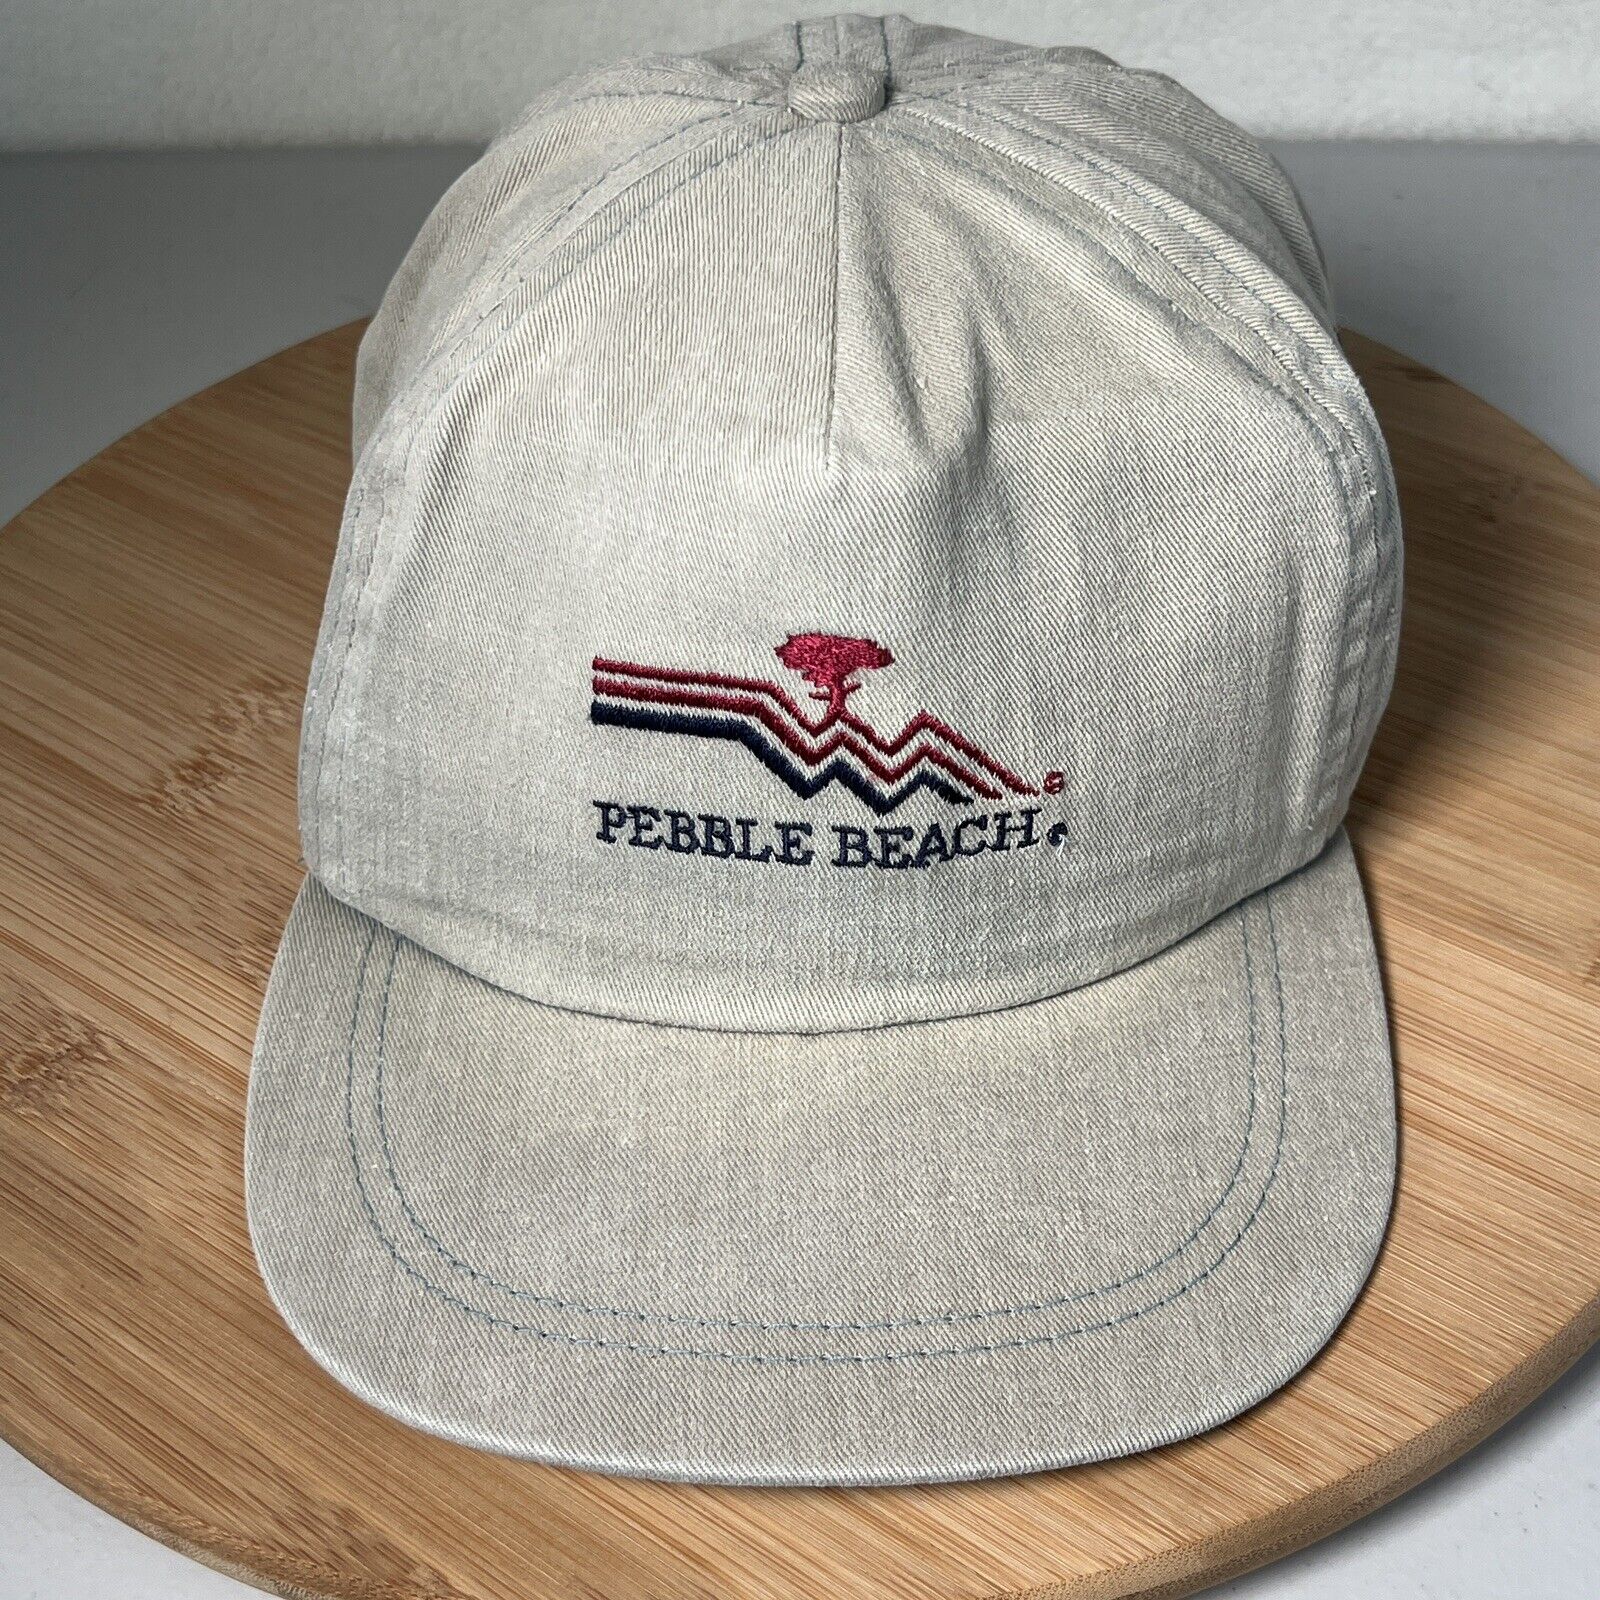 Vintage Pebble Beach Golf Hat Cap by Imperial Headwear Strap Back Adjustable